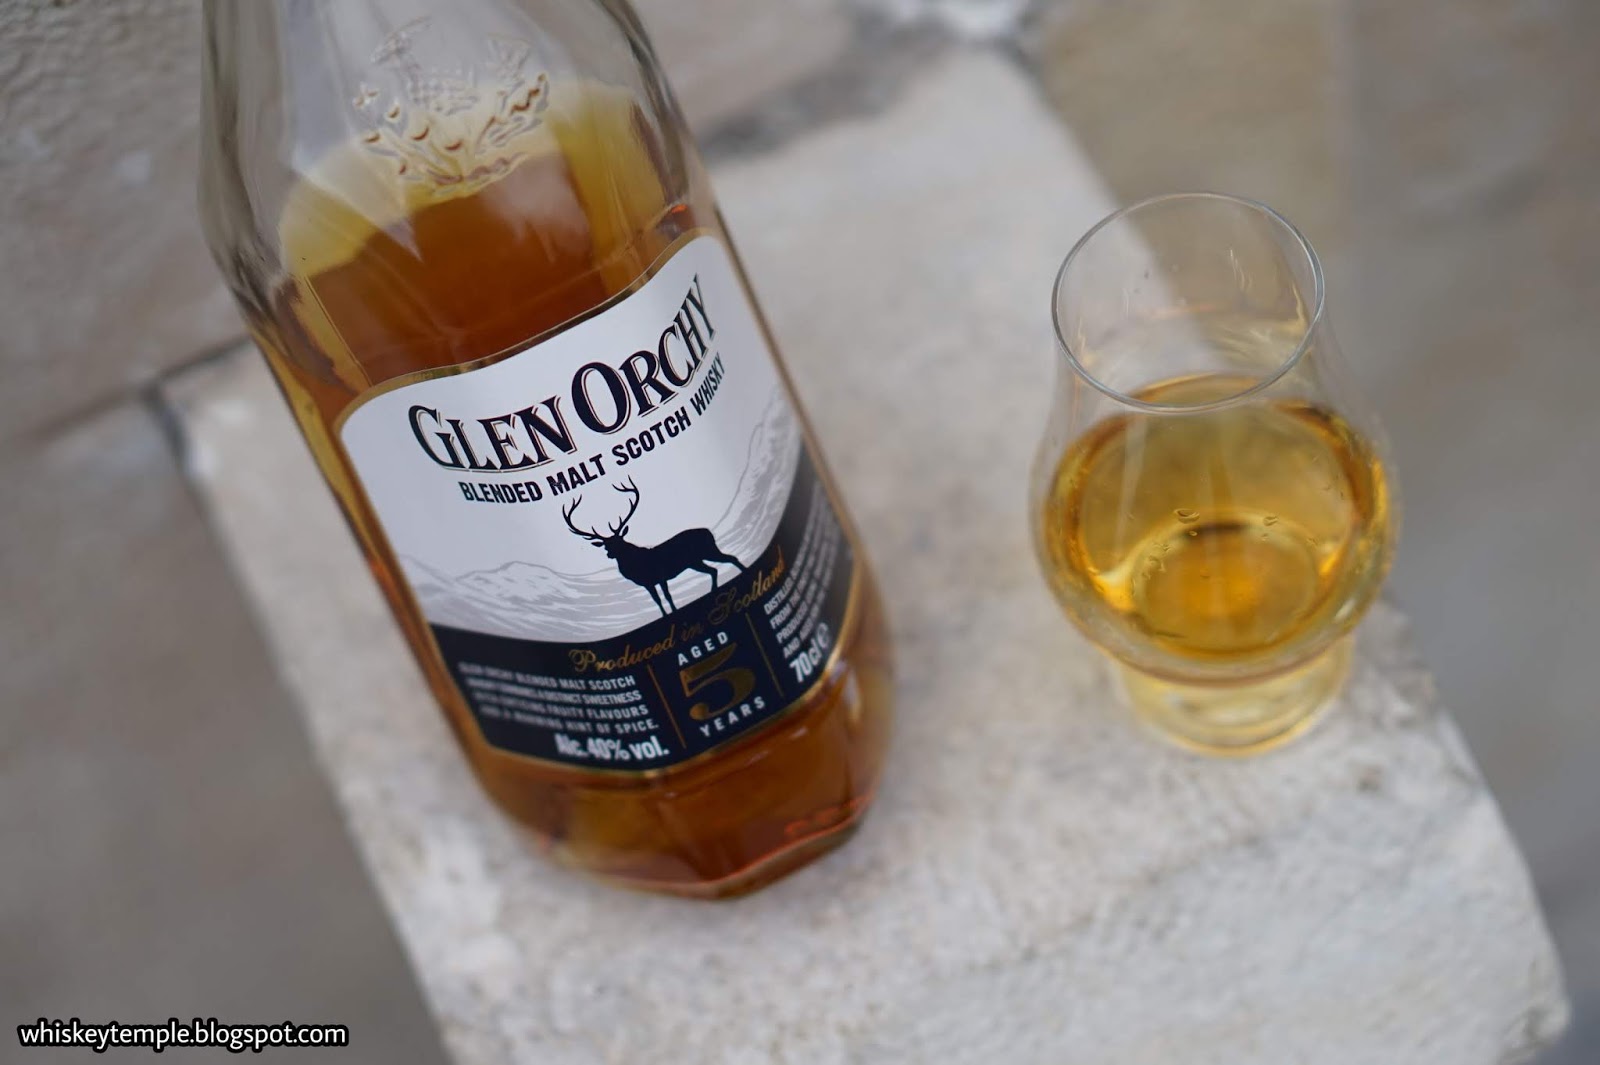 Orchy malt y.o. whisky Glen – 5 Whiskeytemple blended